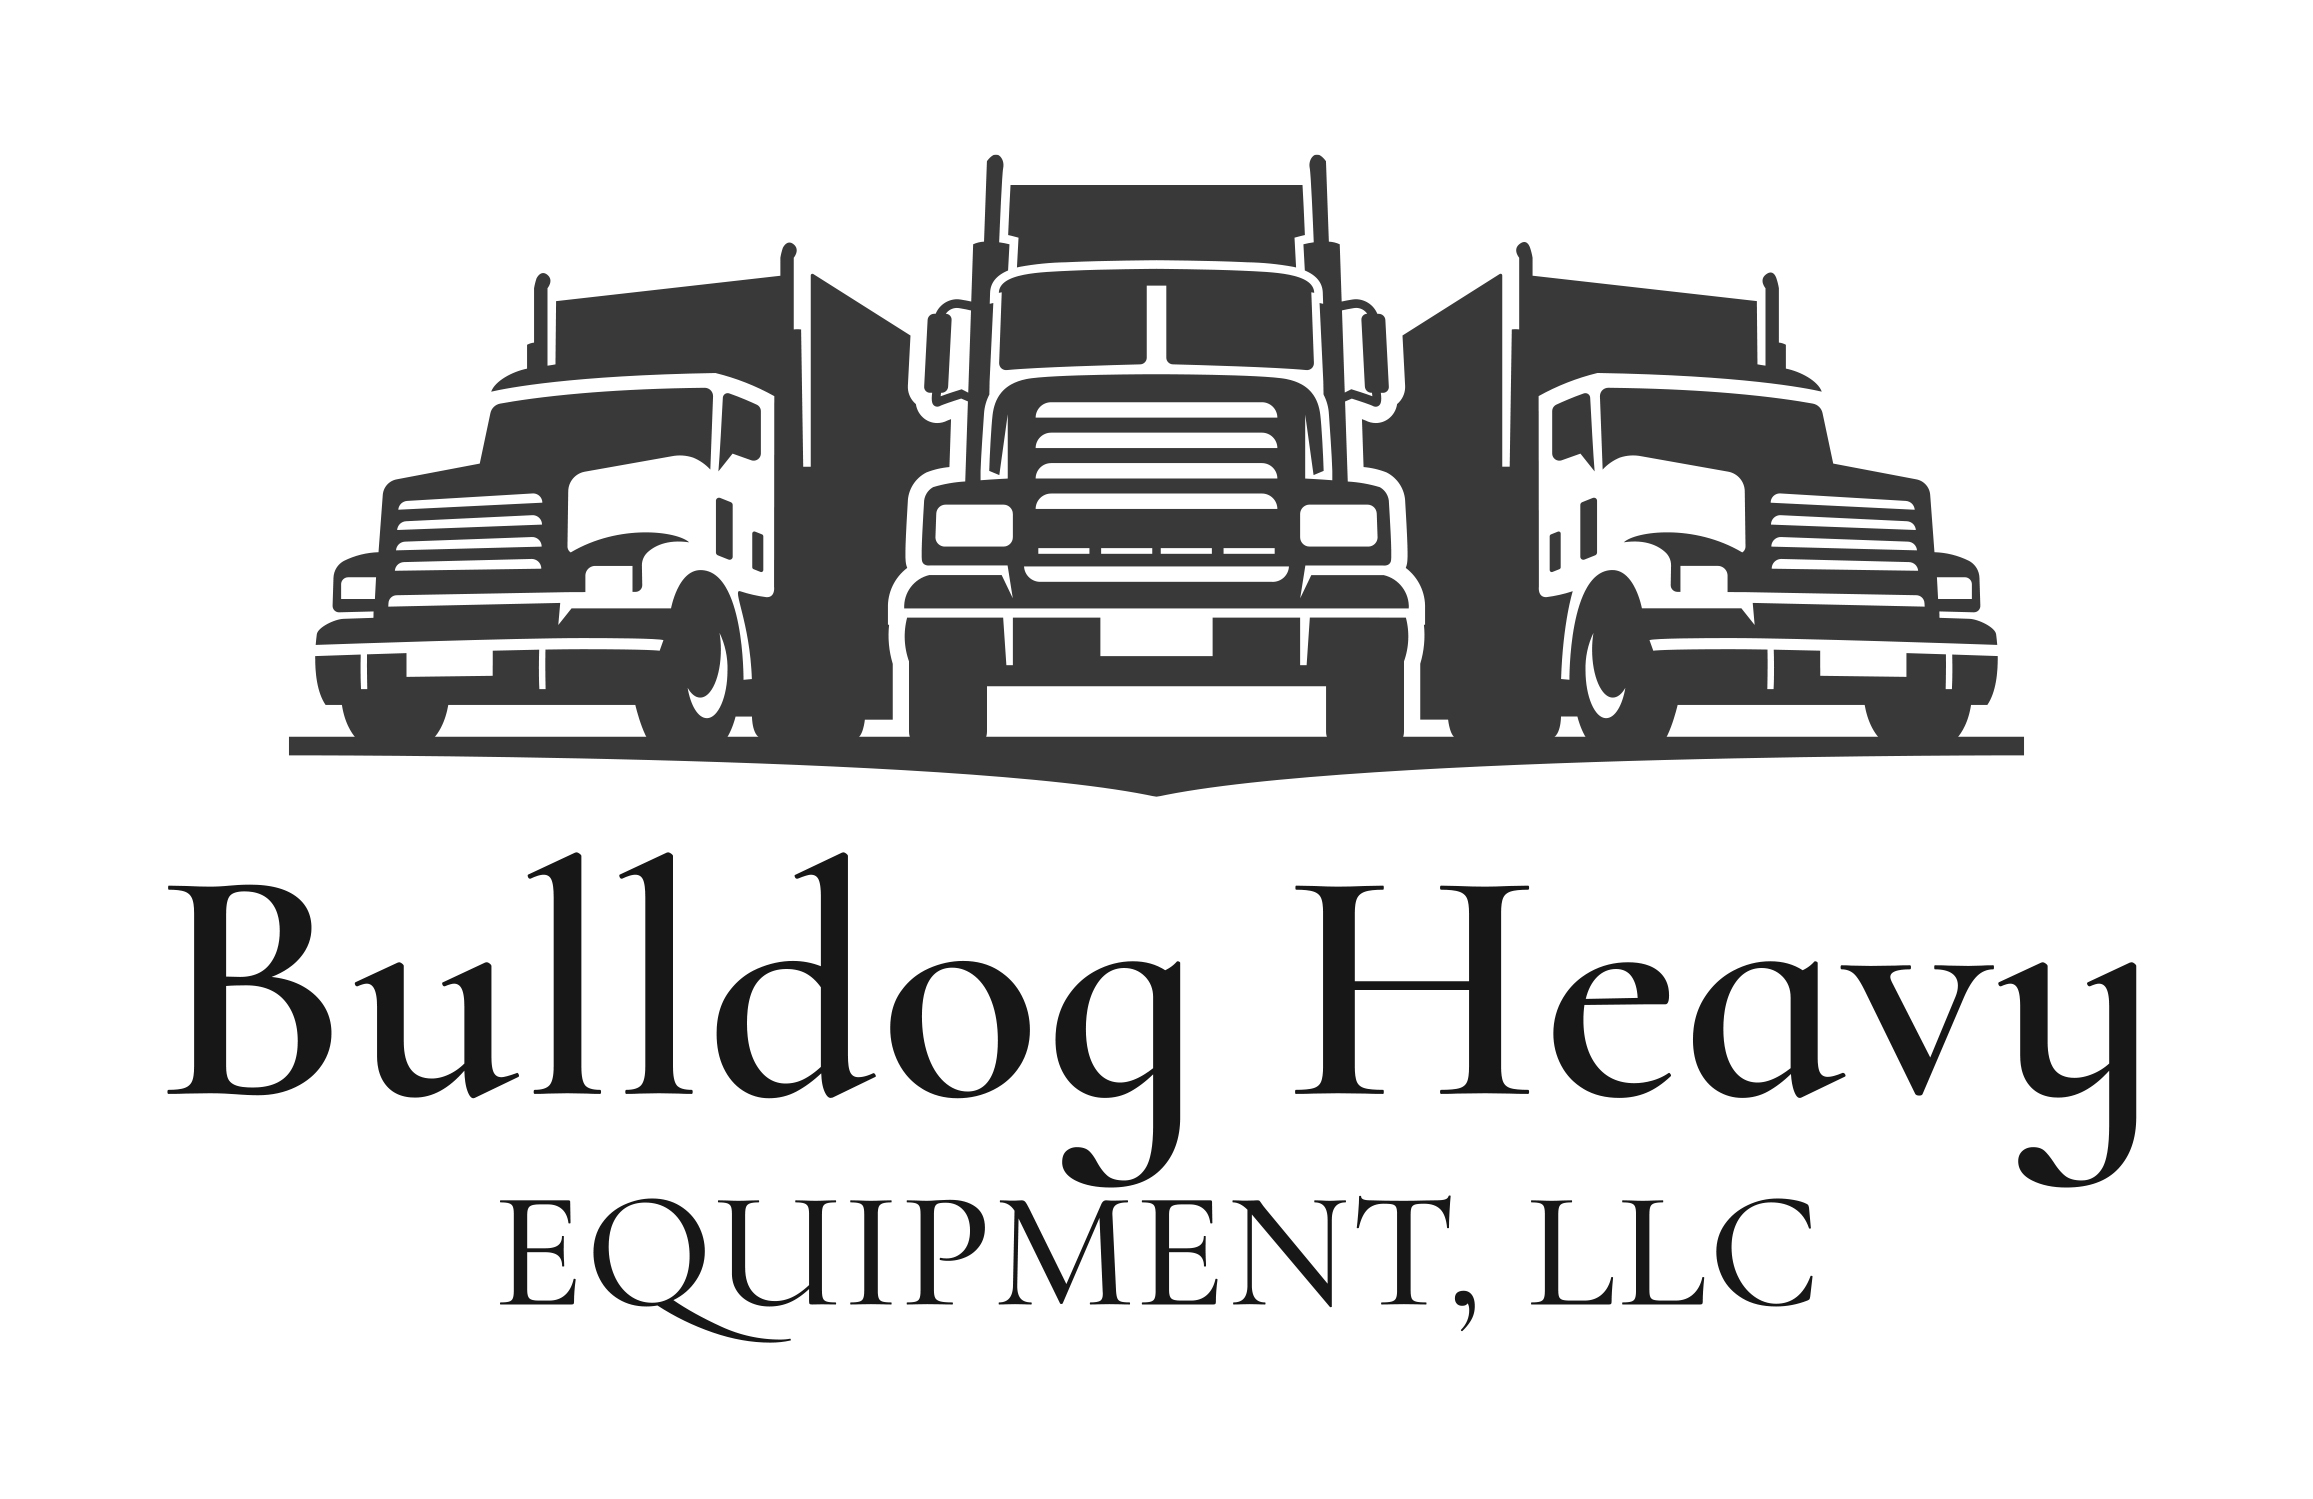 Bulldog Heavy Equipment